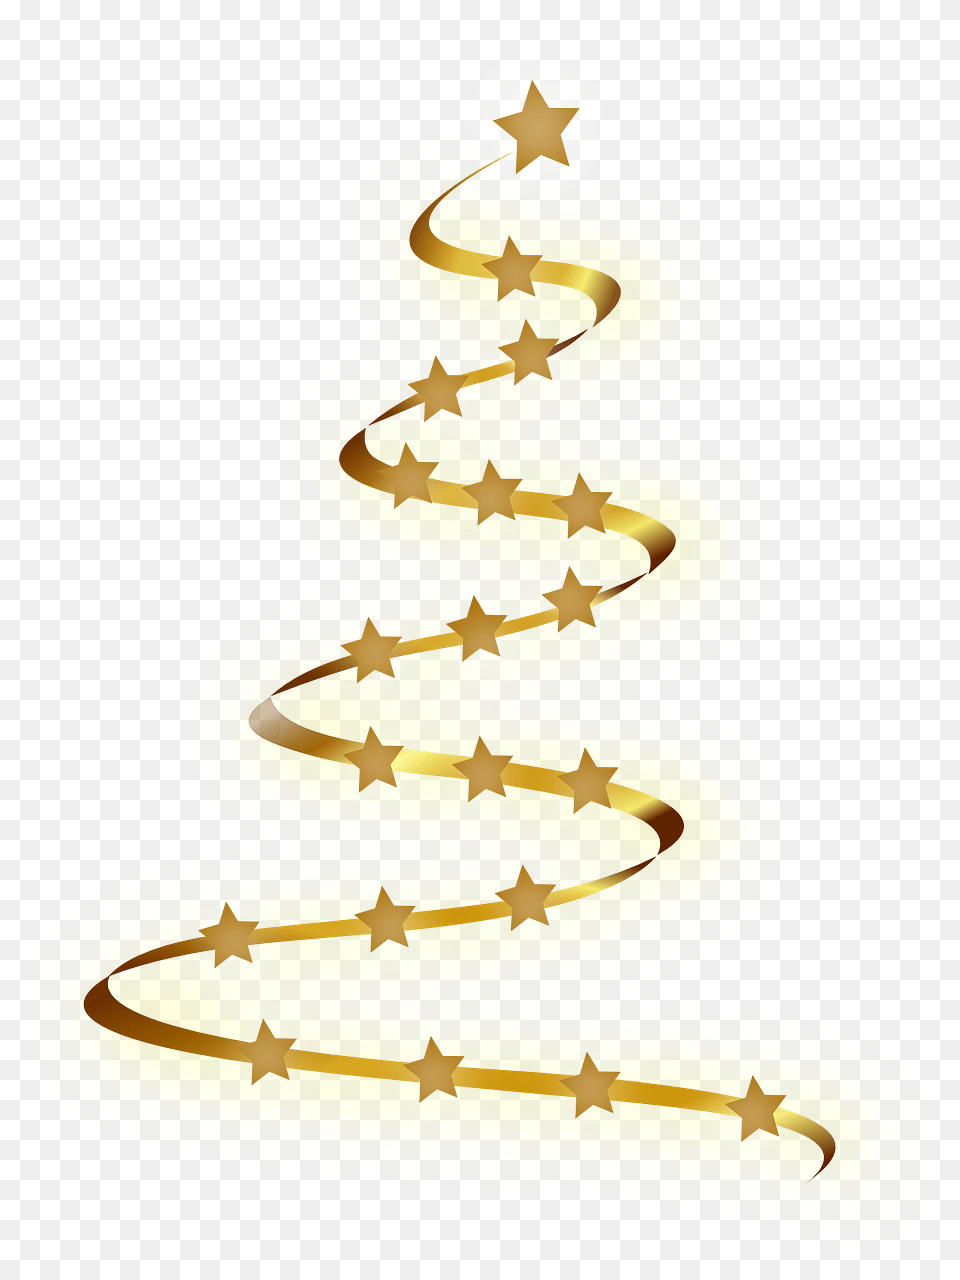 Gold Christmas Tree Clip Art Vector Clip Art Gold Christmas Tree Clip Art, Symbol Png Image